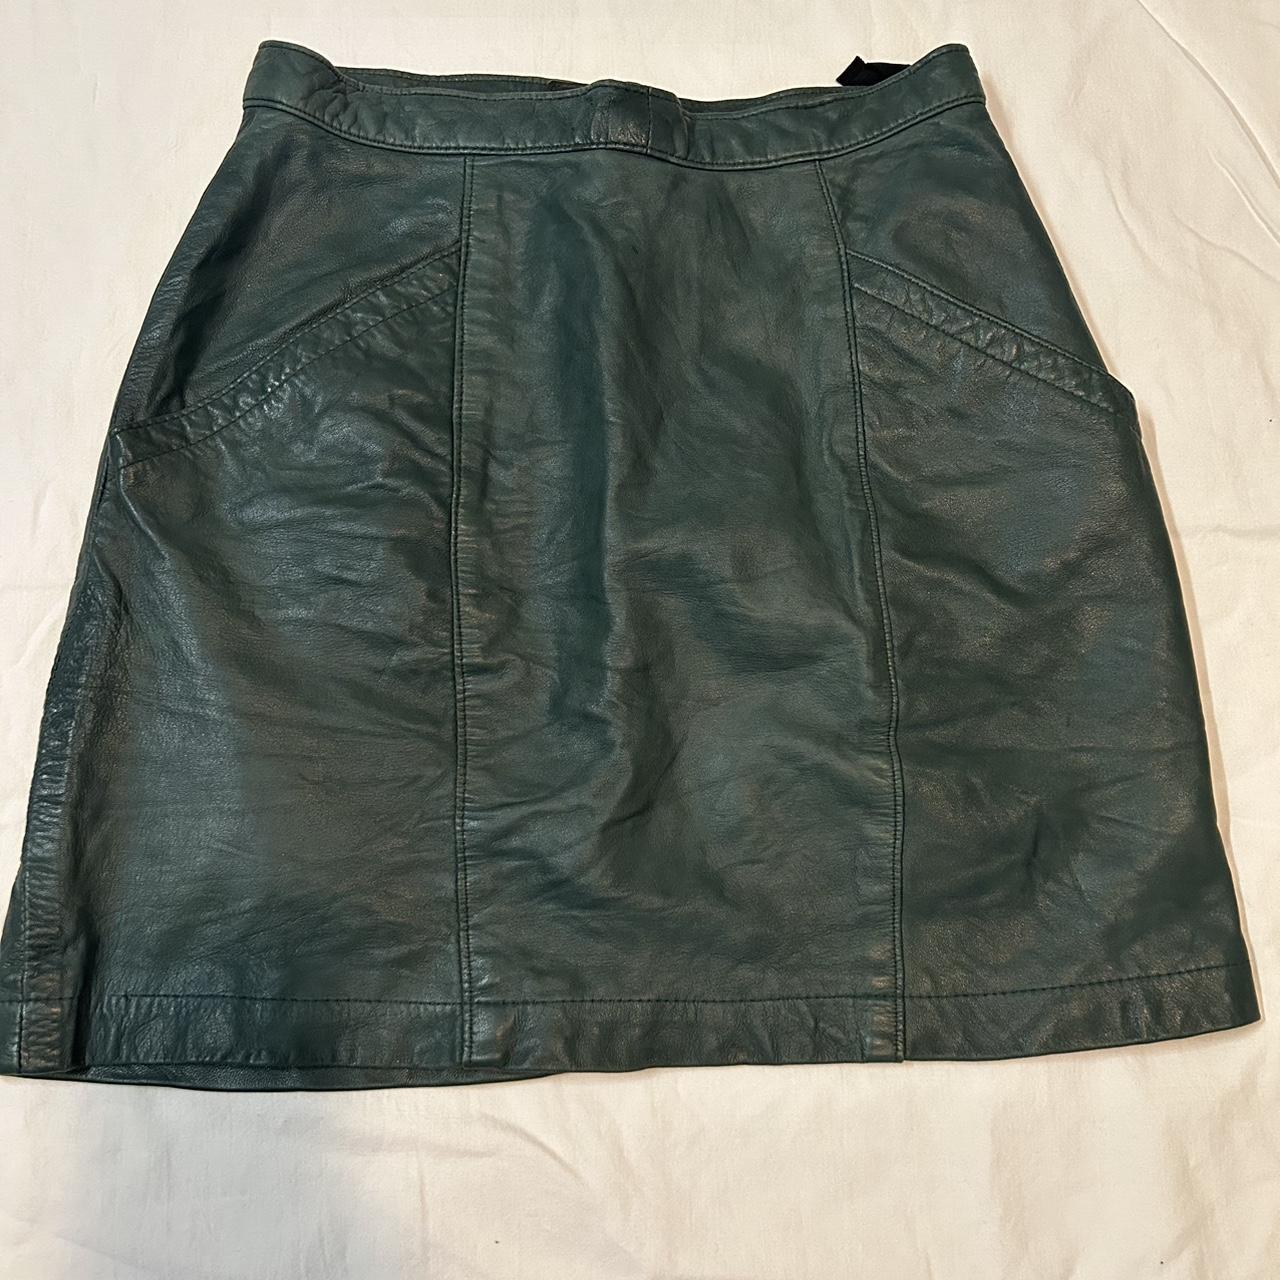 Vintage green leather mini skirt. - Depop